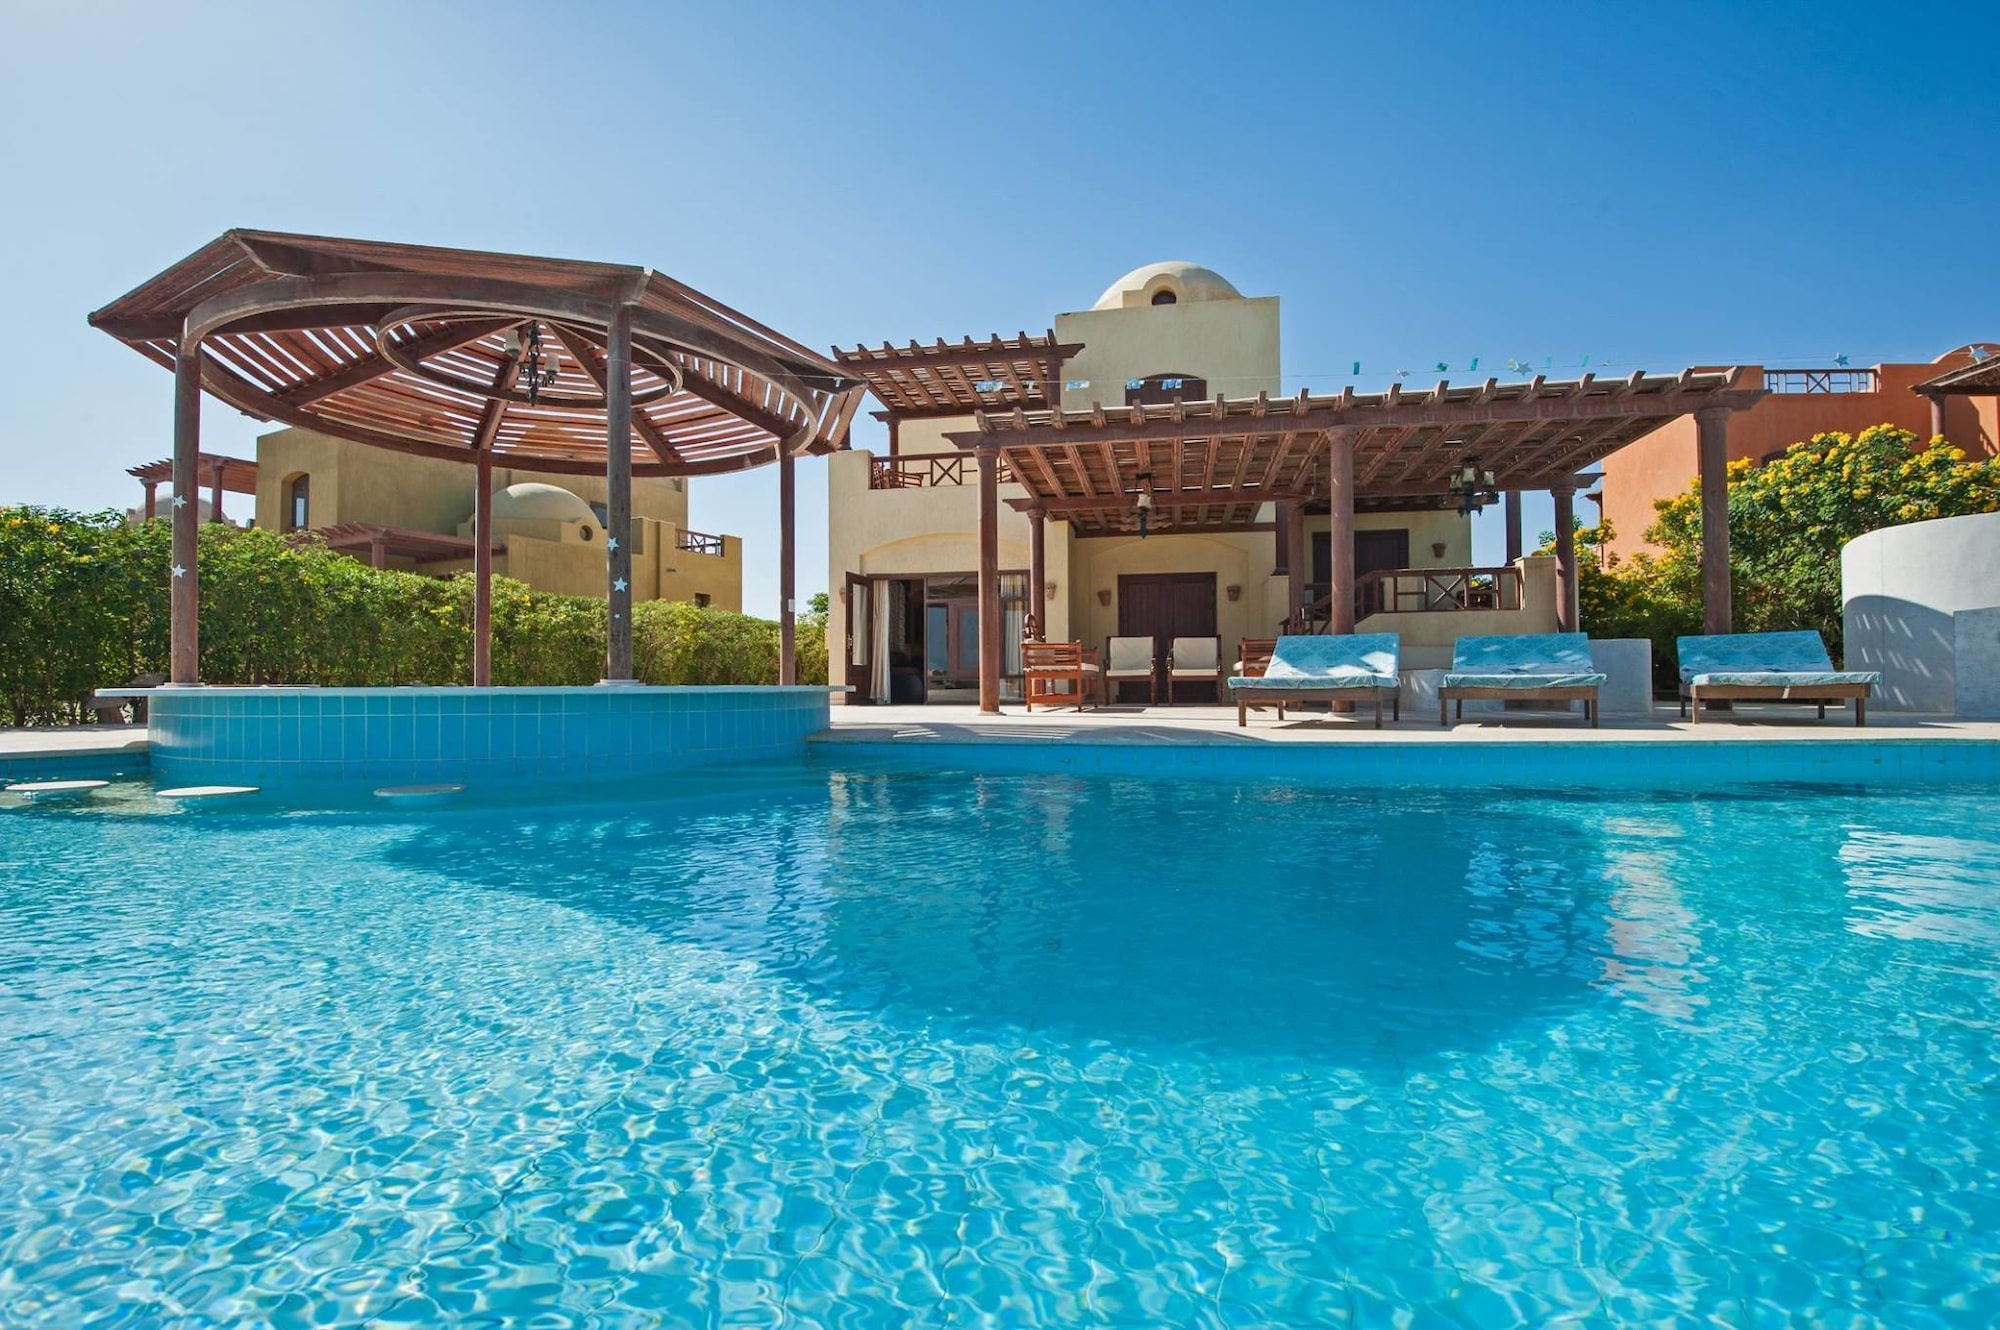 Villa with private pool in gouna